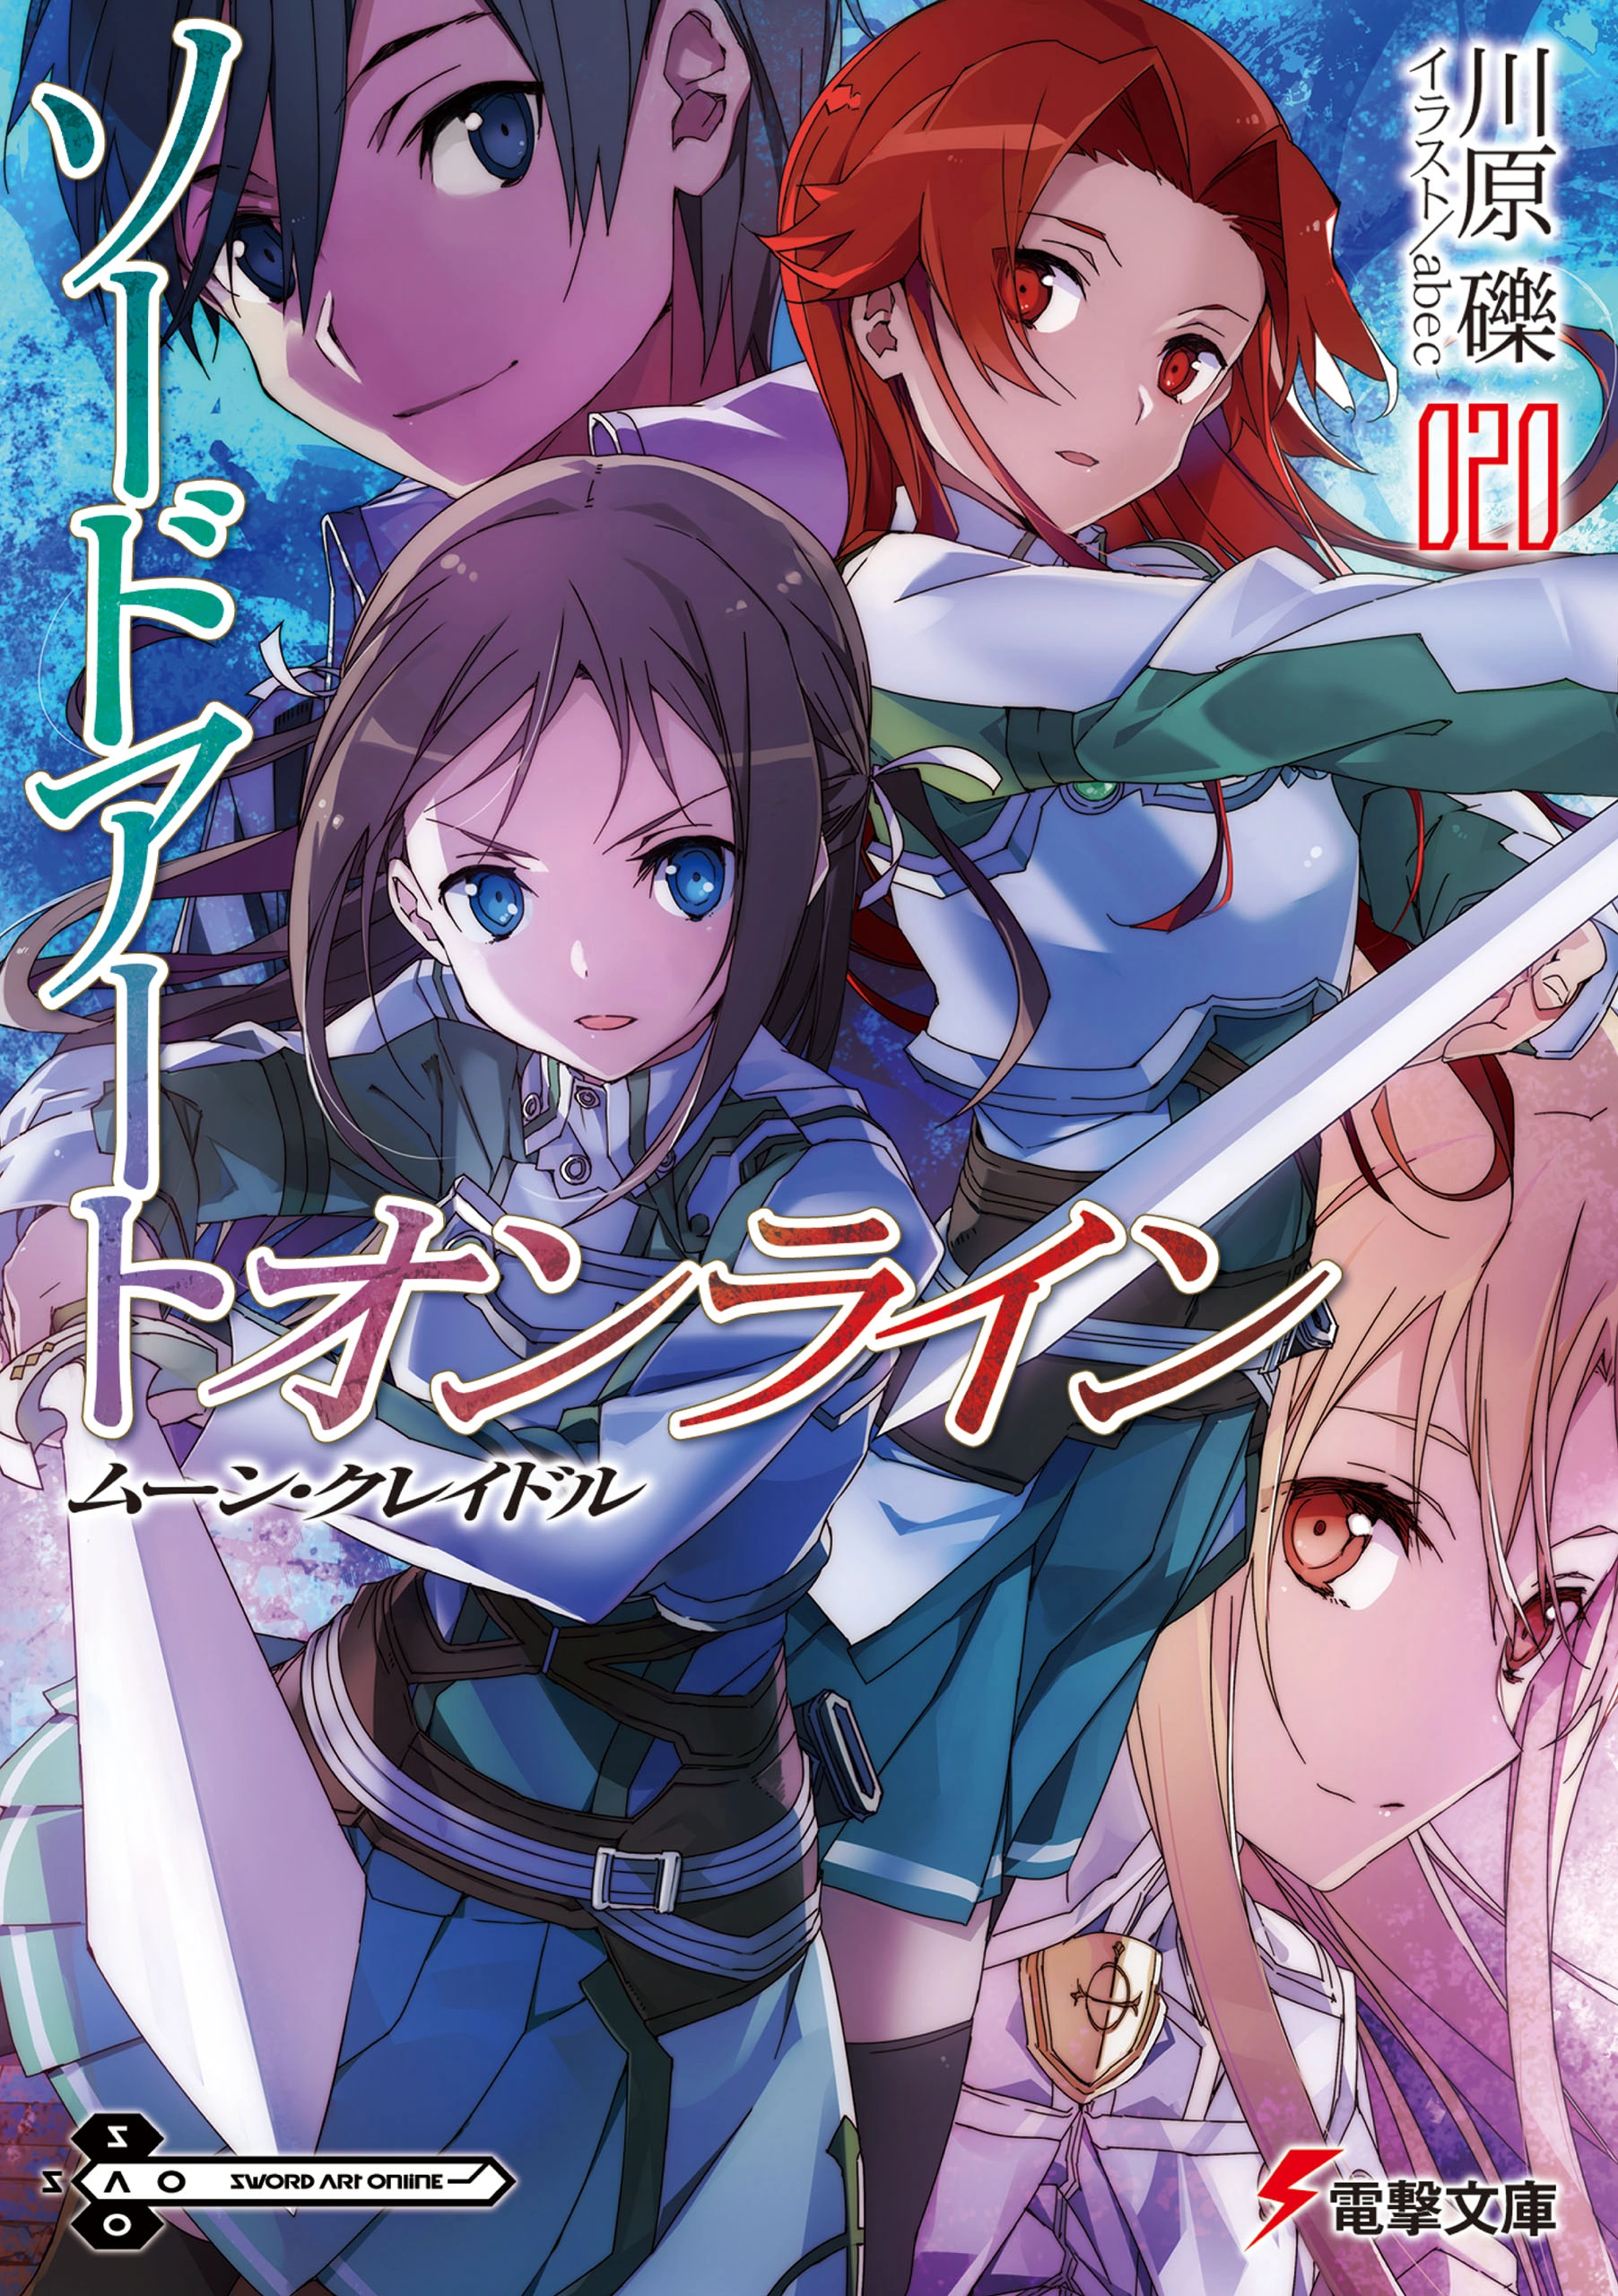 Sword-Art-Online-Unleash-Blading-Moon-Cradle-Light-Novel-Cover